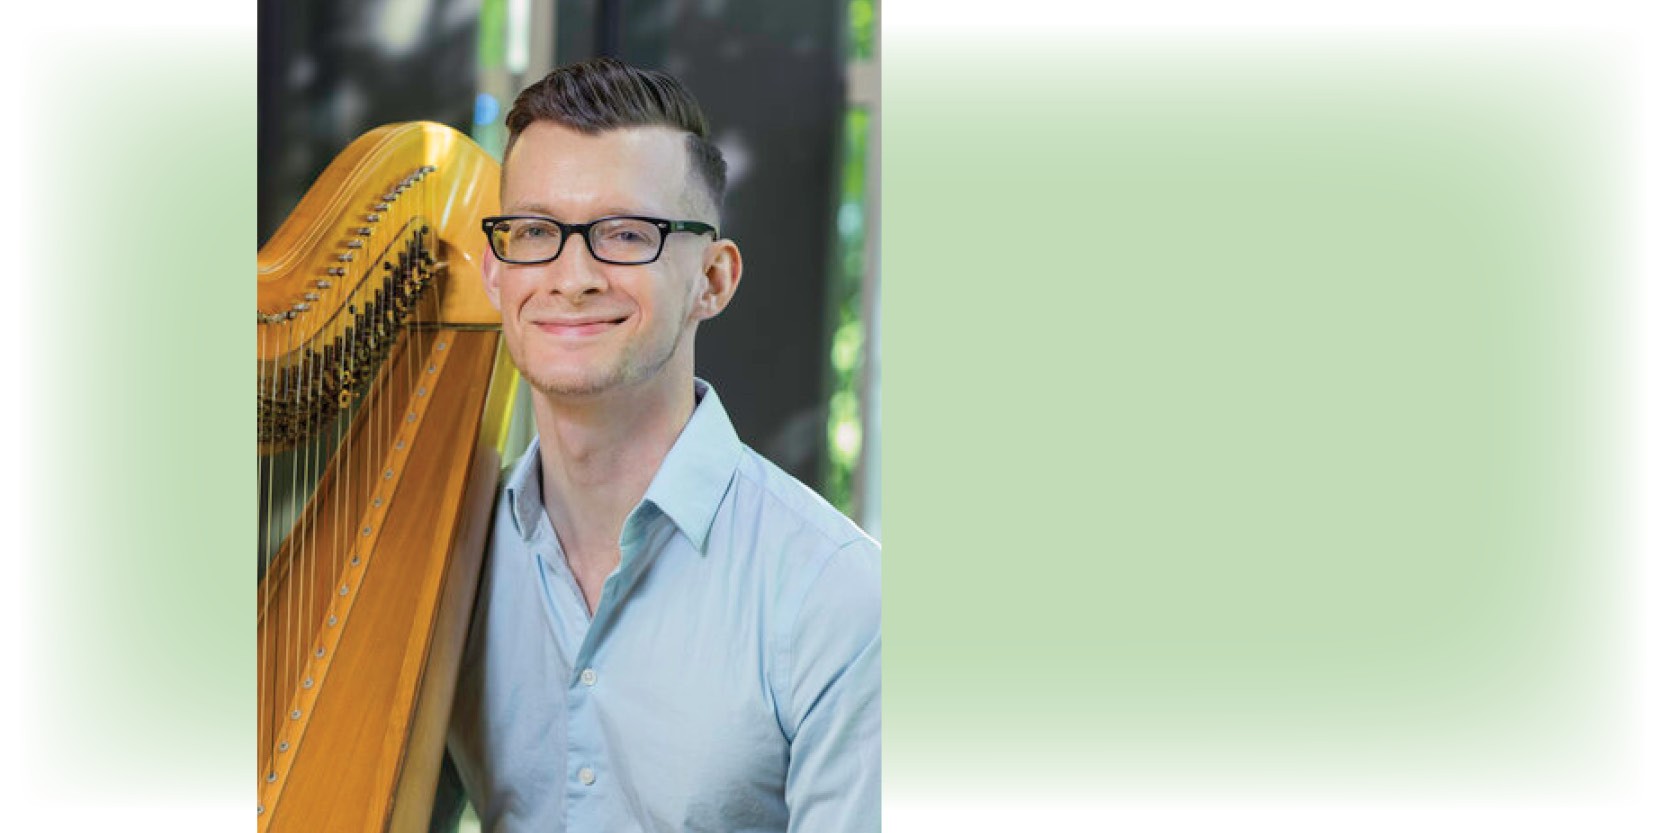 LMU will host harpist Joseph Rebman